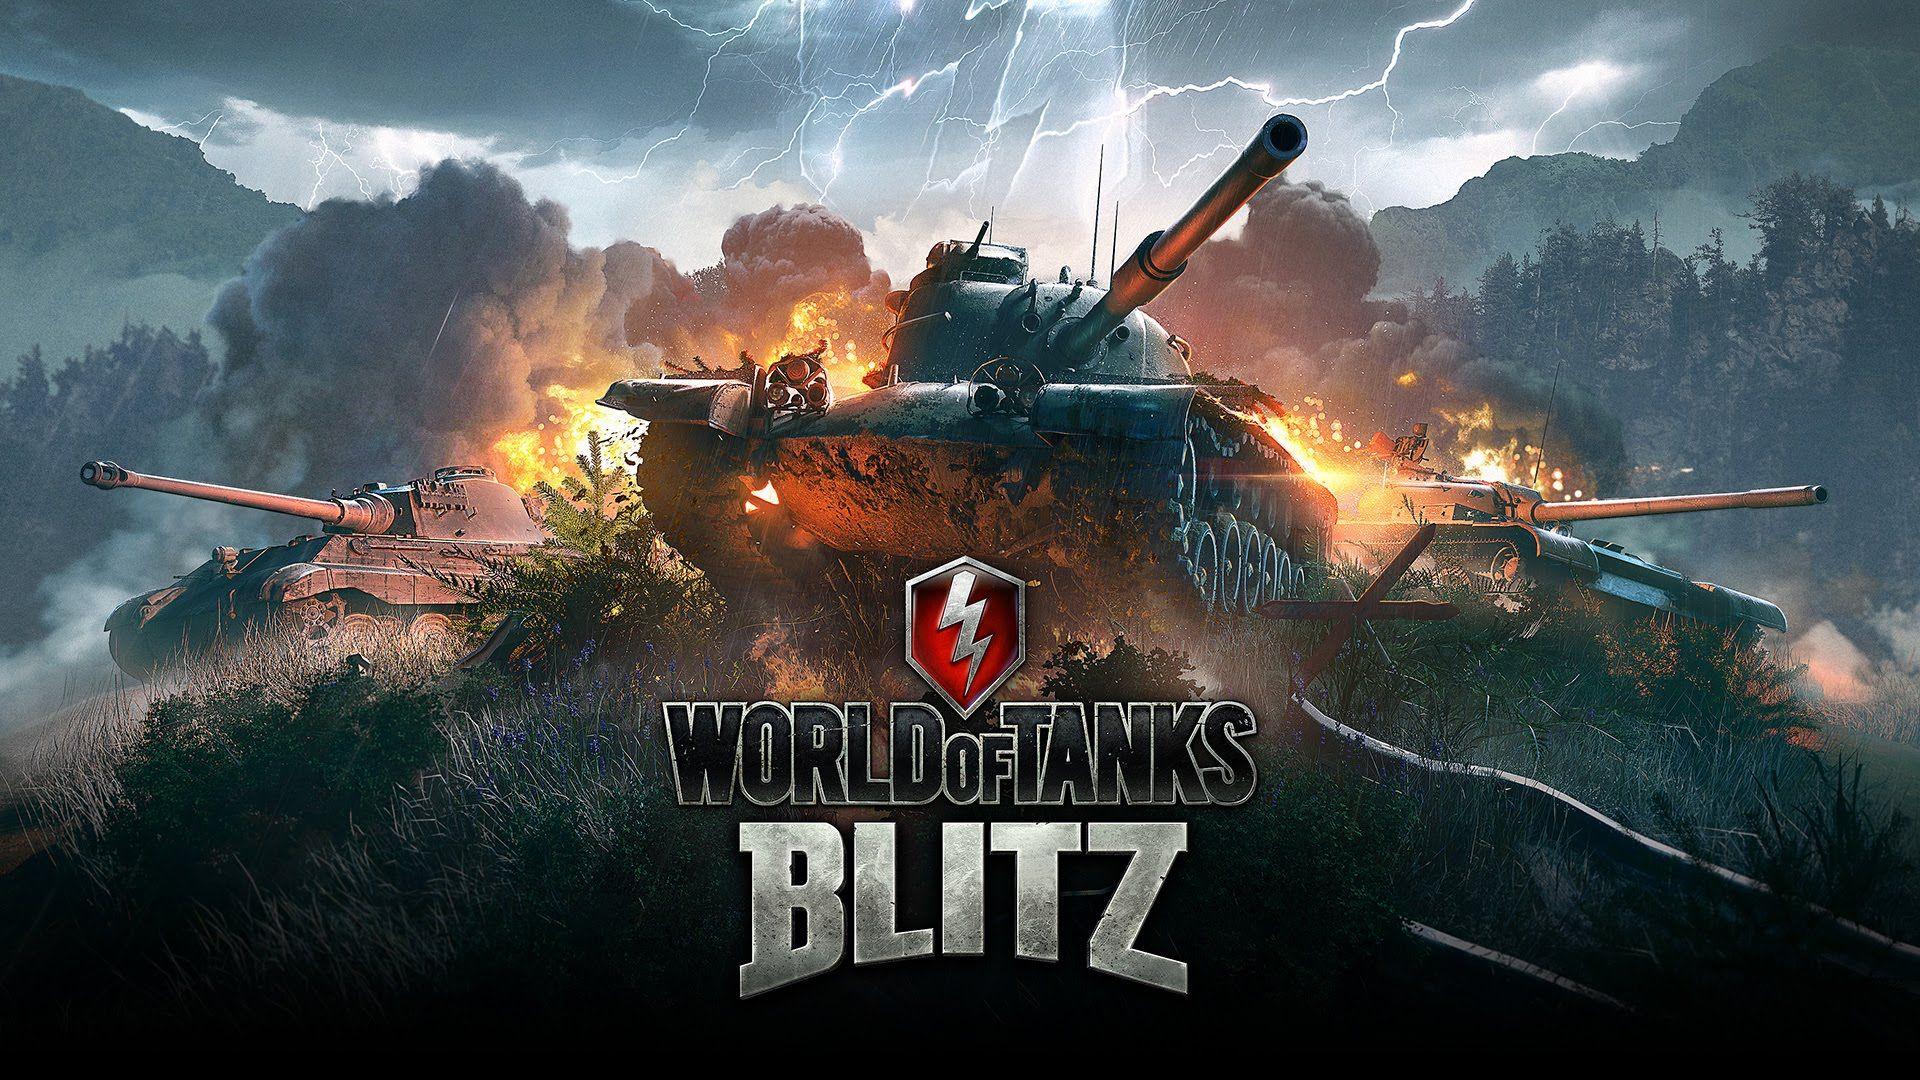 world of tanks blitz download pc windows 7